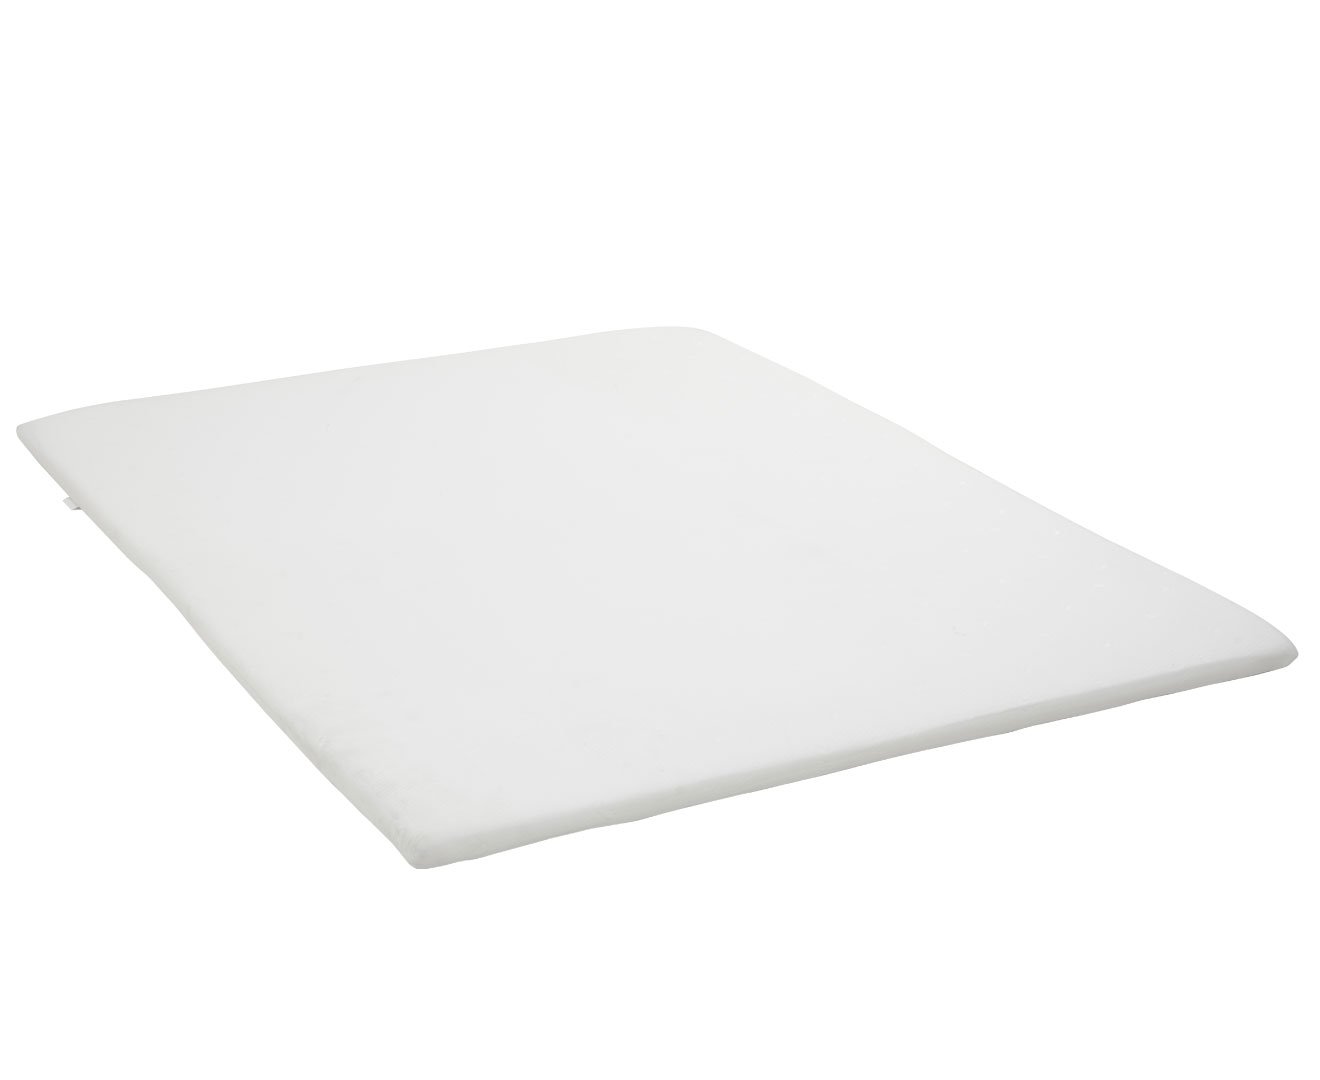 Laura Hill High Density Mattress foam Topper 5cm - Single 1